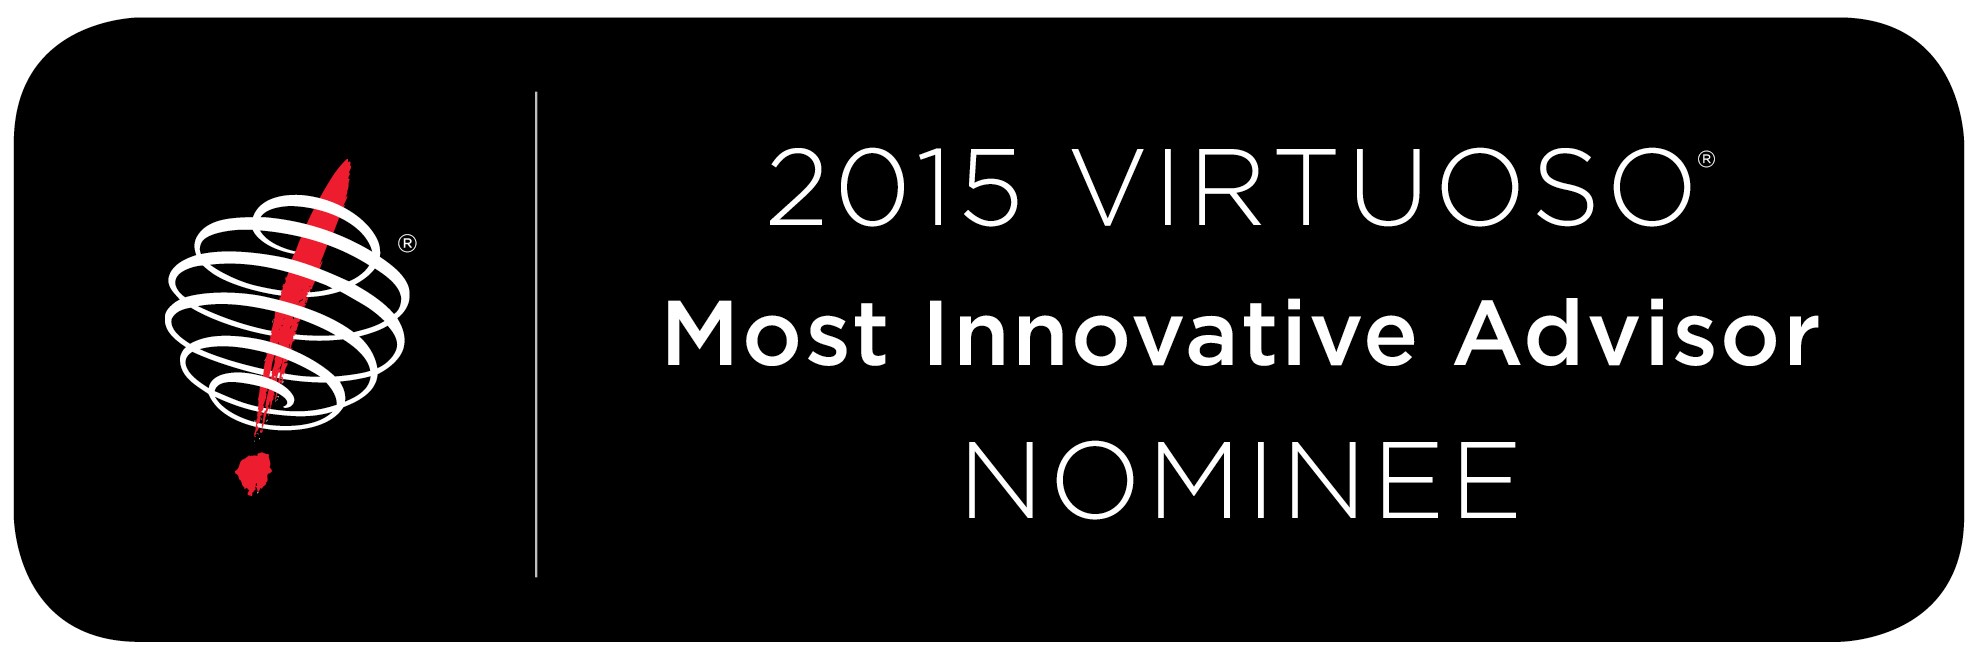 2015 Virtuoso Most Innovative Advisor Nominee